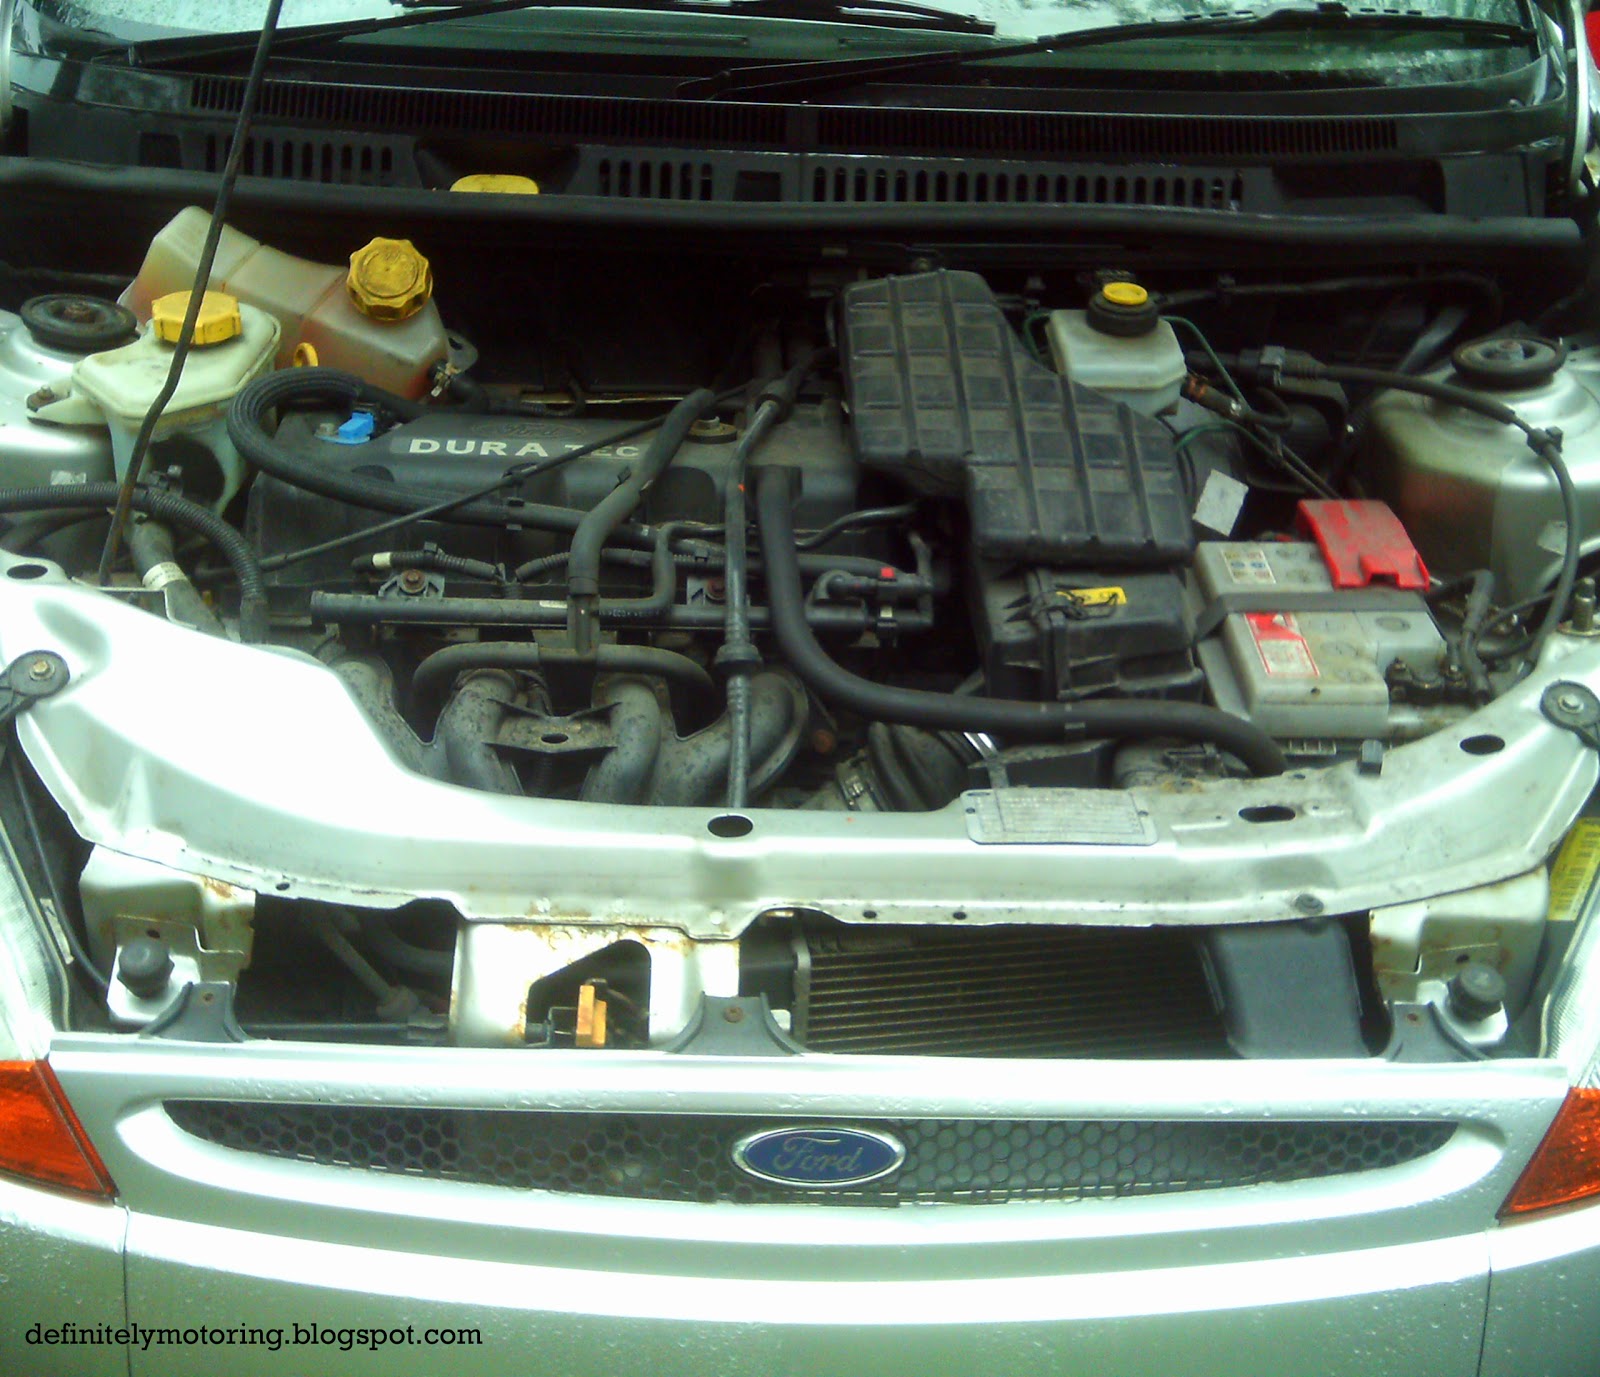 Ford duratec v6 engine reliability #9